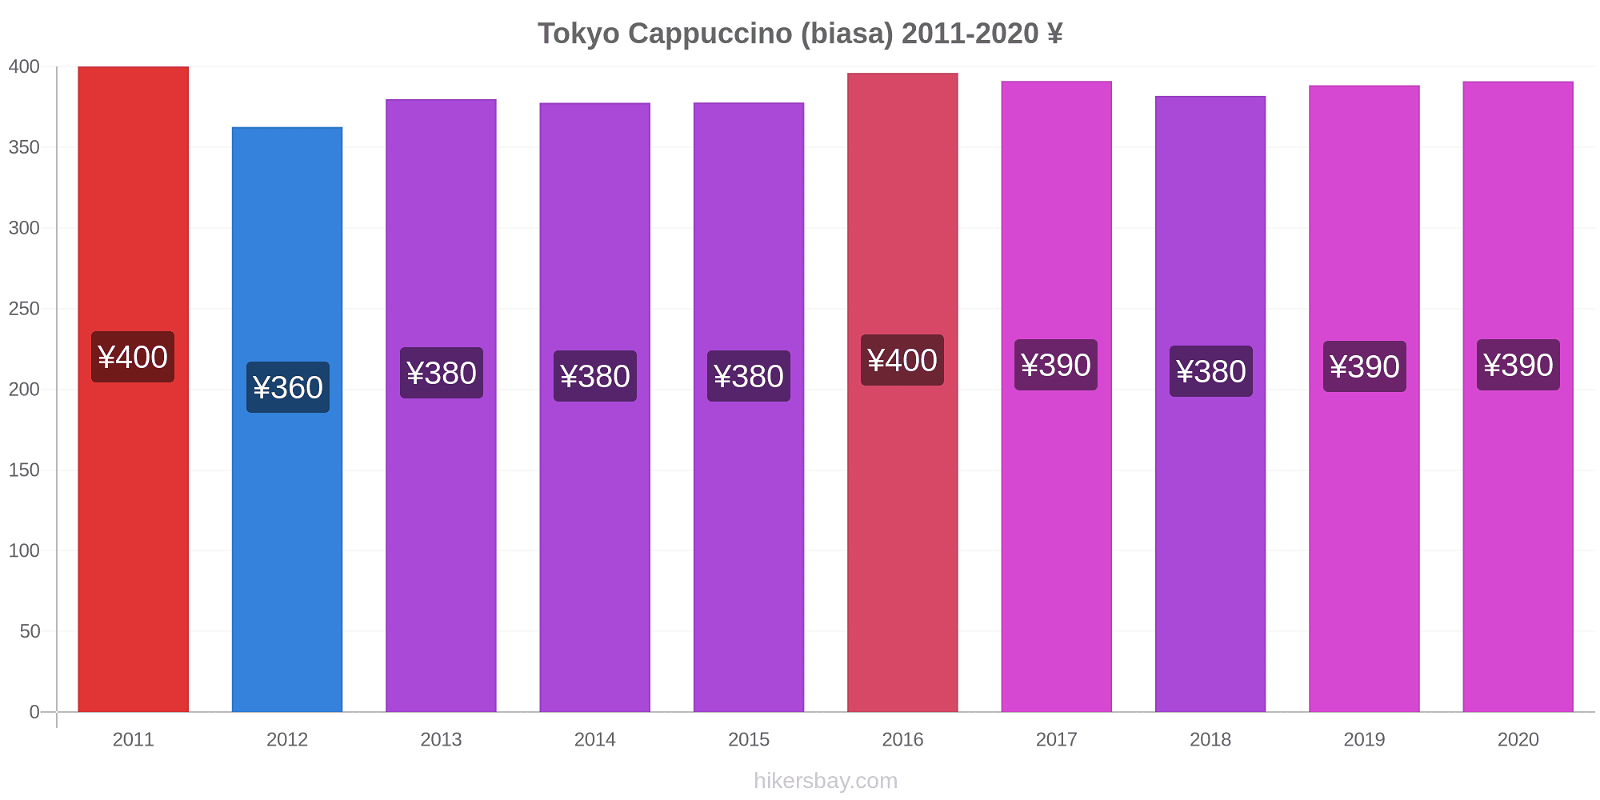 Tokyo perubahan harga Cappuccino (biasa) hikersbay.com